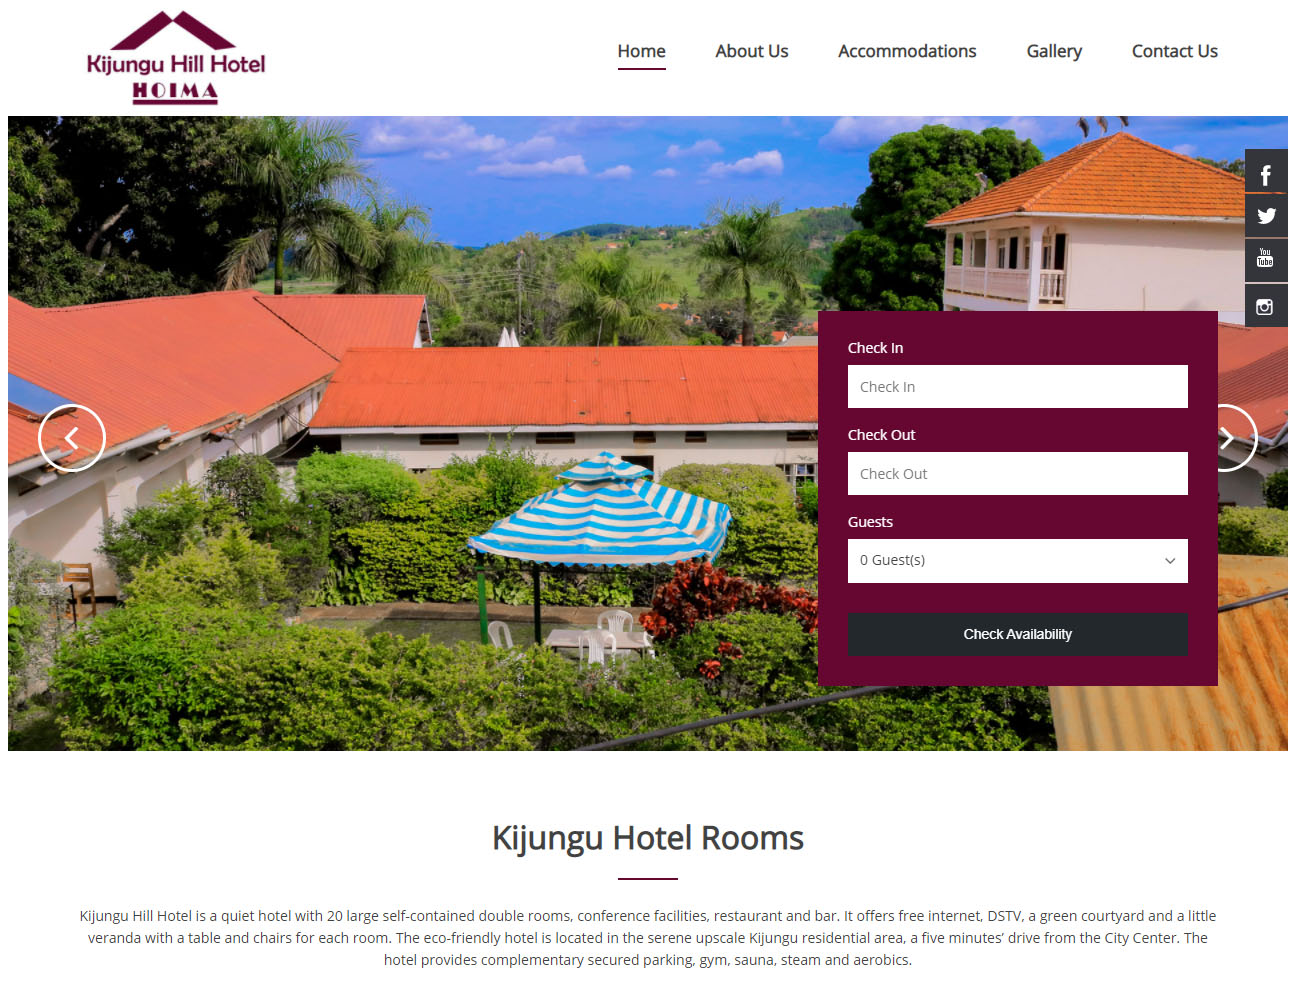 KIJUNGU HILL HOTEL WEBSITE DESIGNED BY HOST GIANT UGANDA